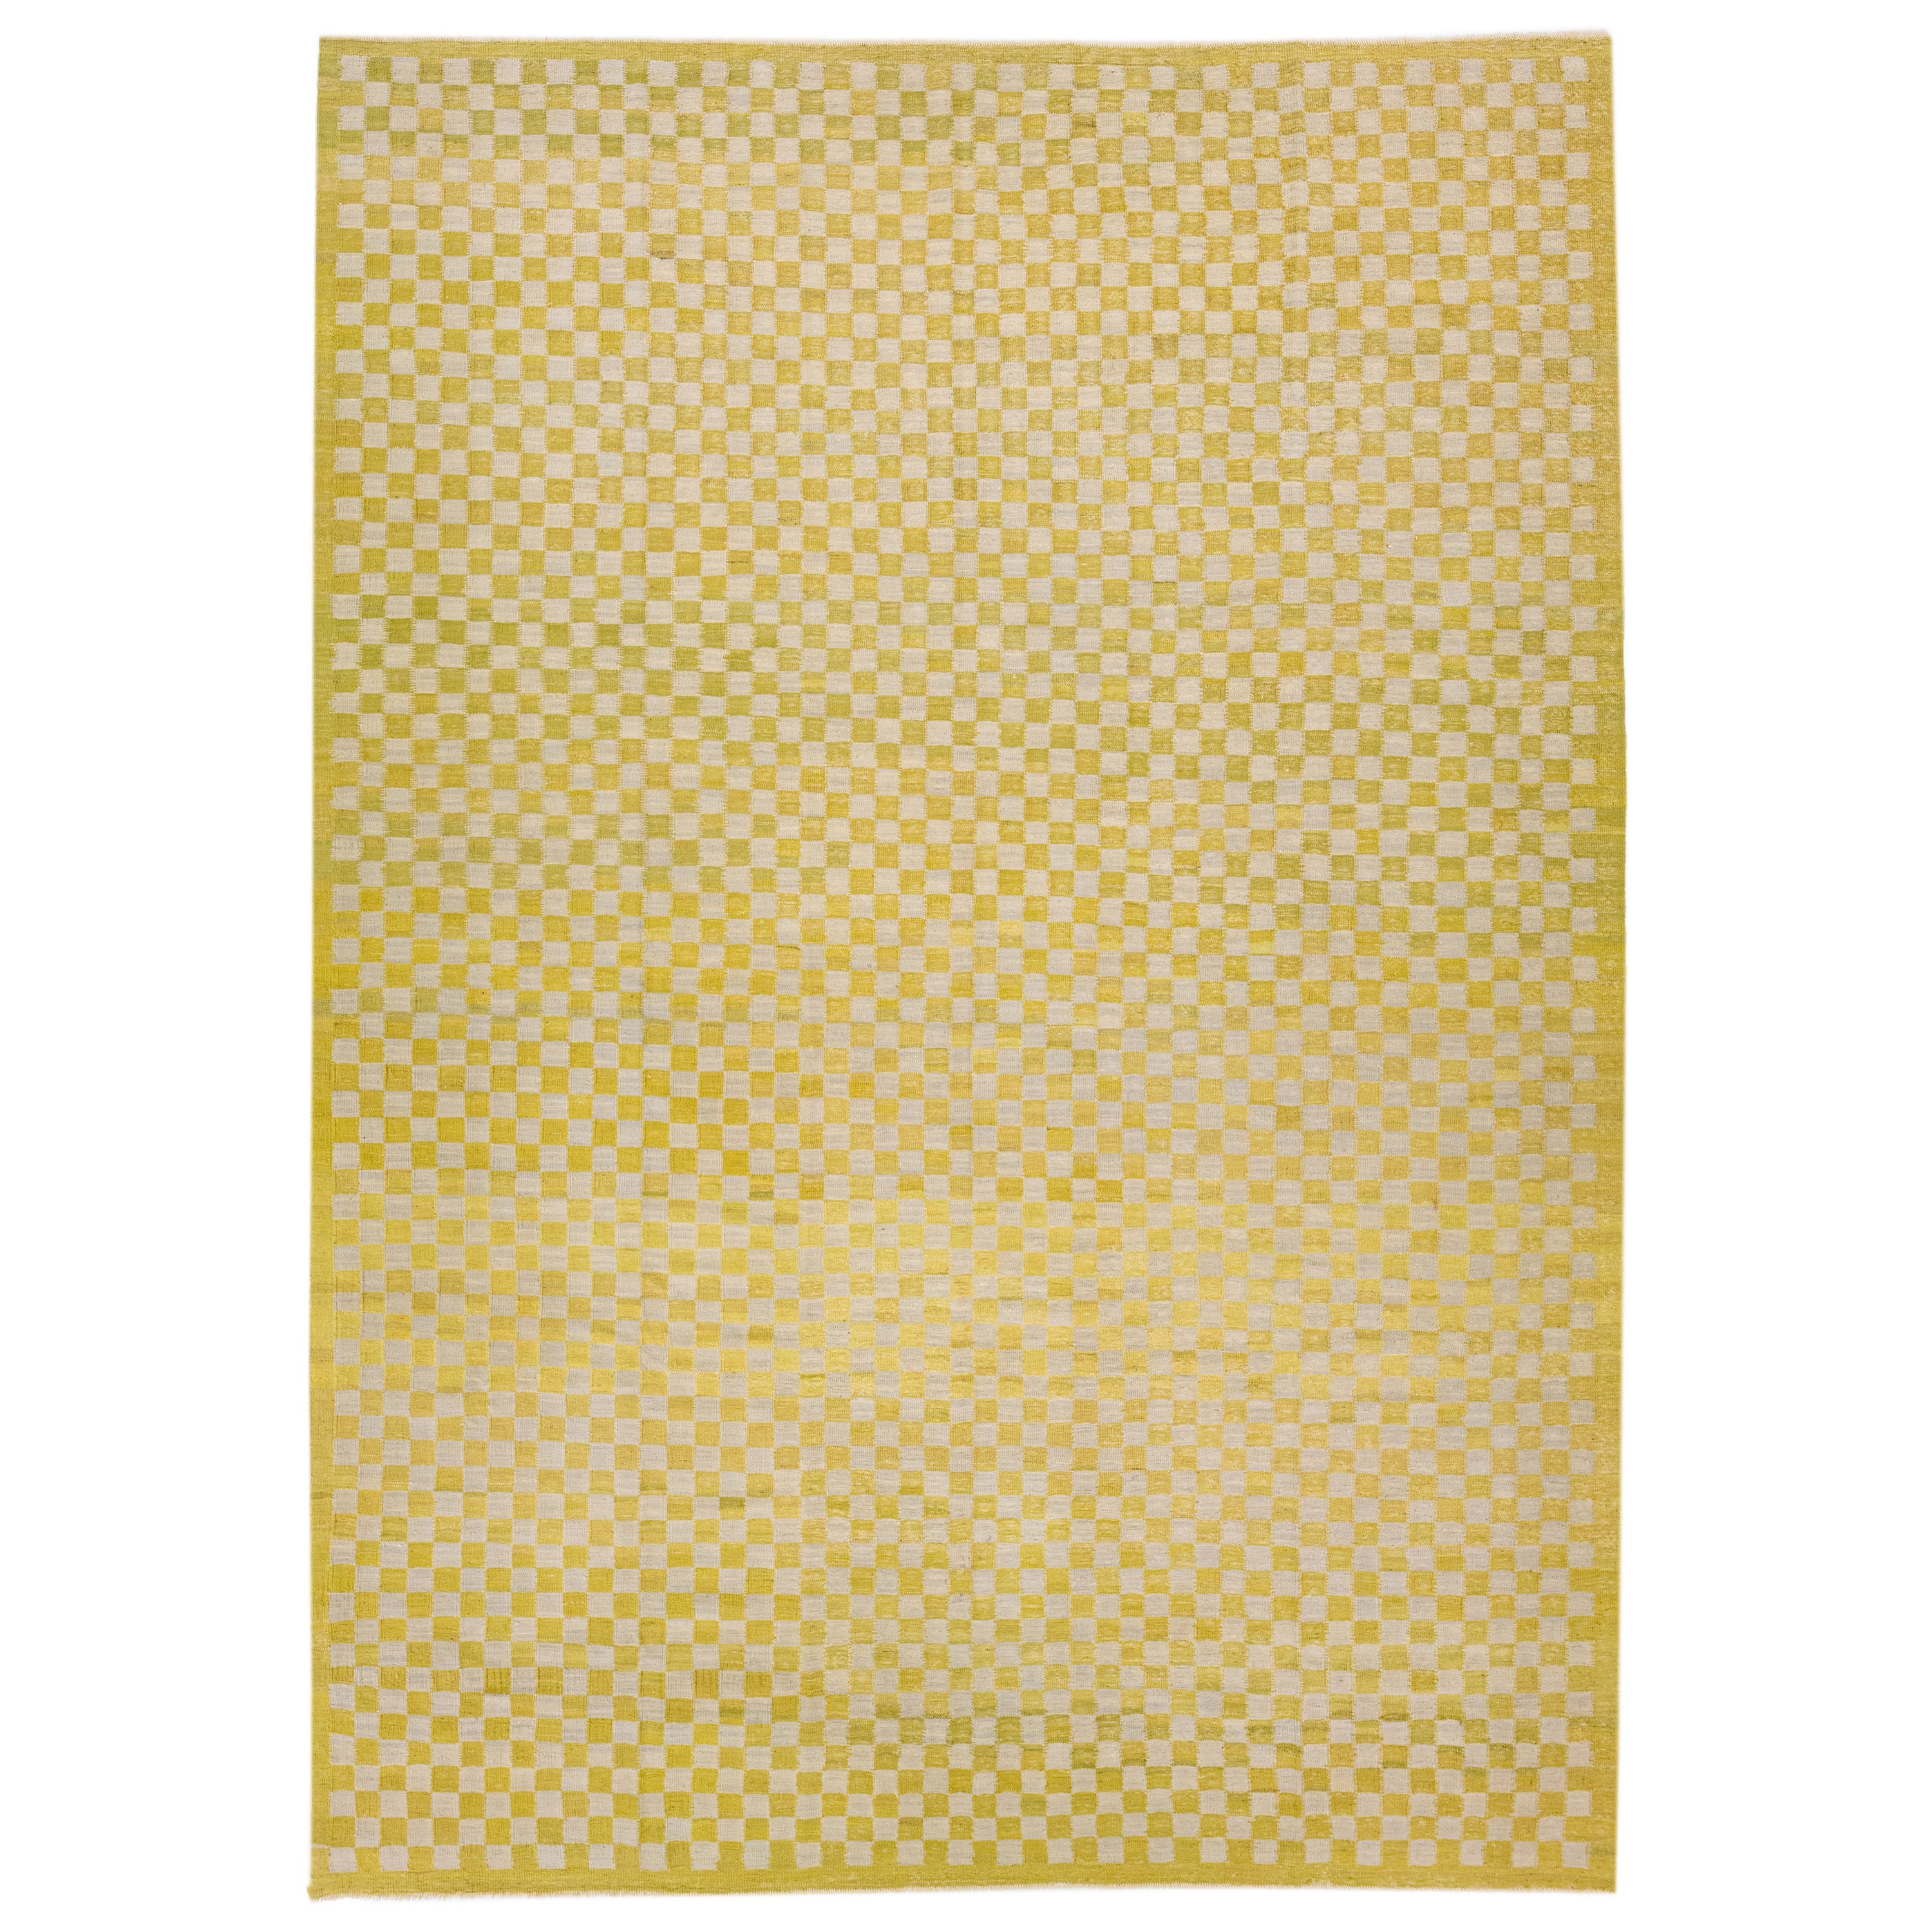 Vintage Kilim Yellow Handmade Wool Rug with Checker Motif